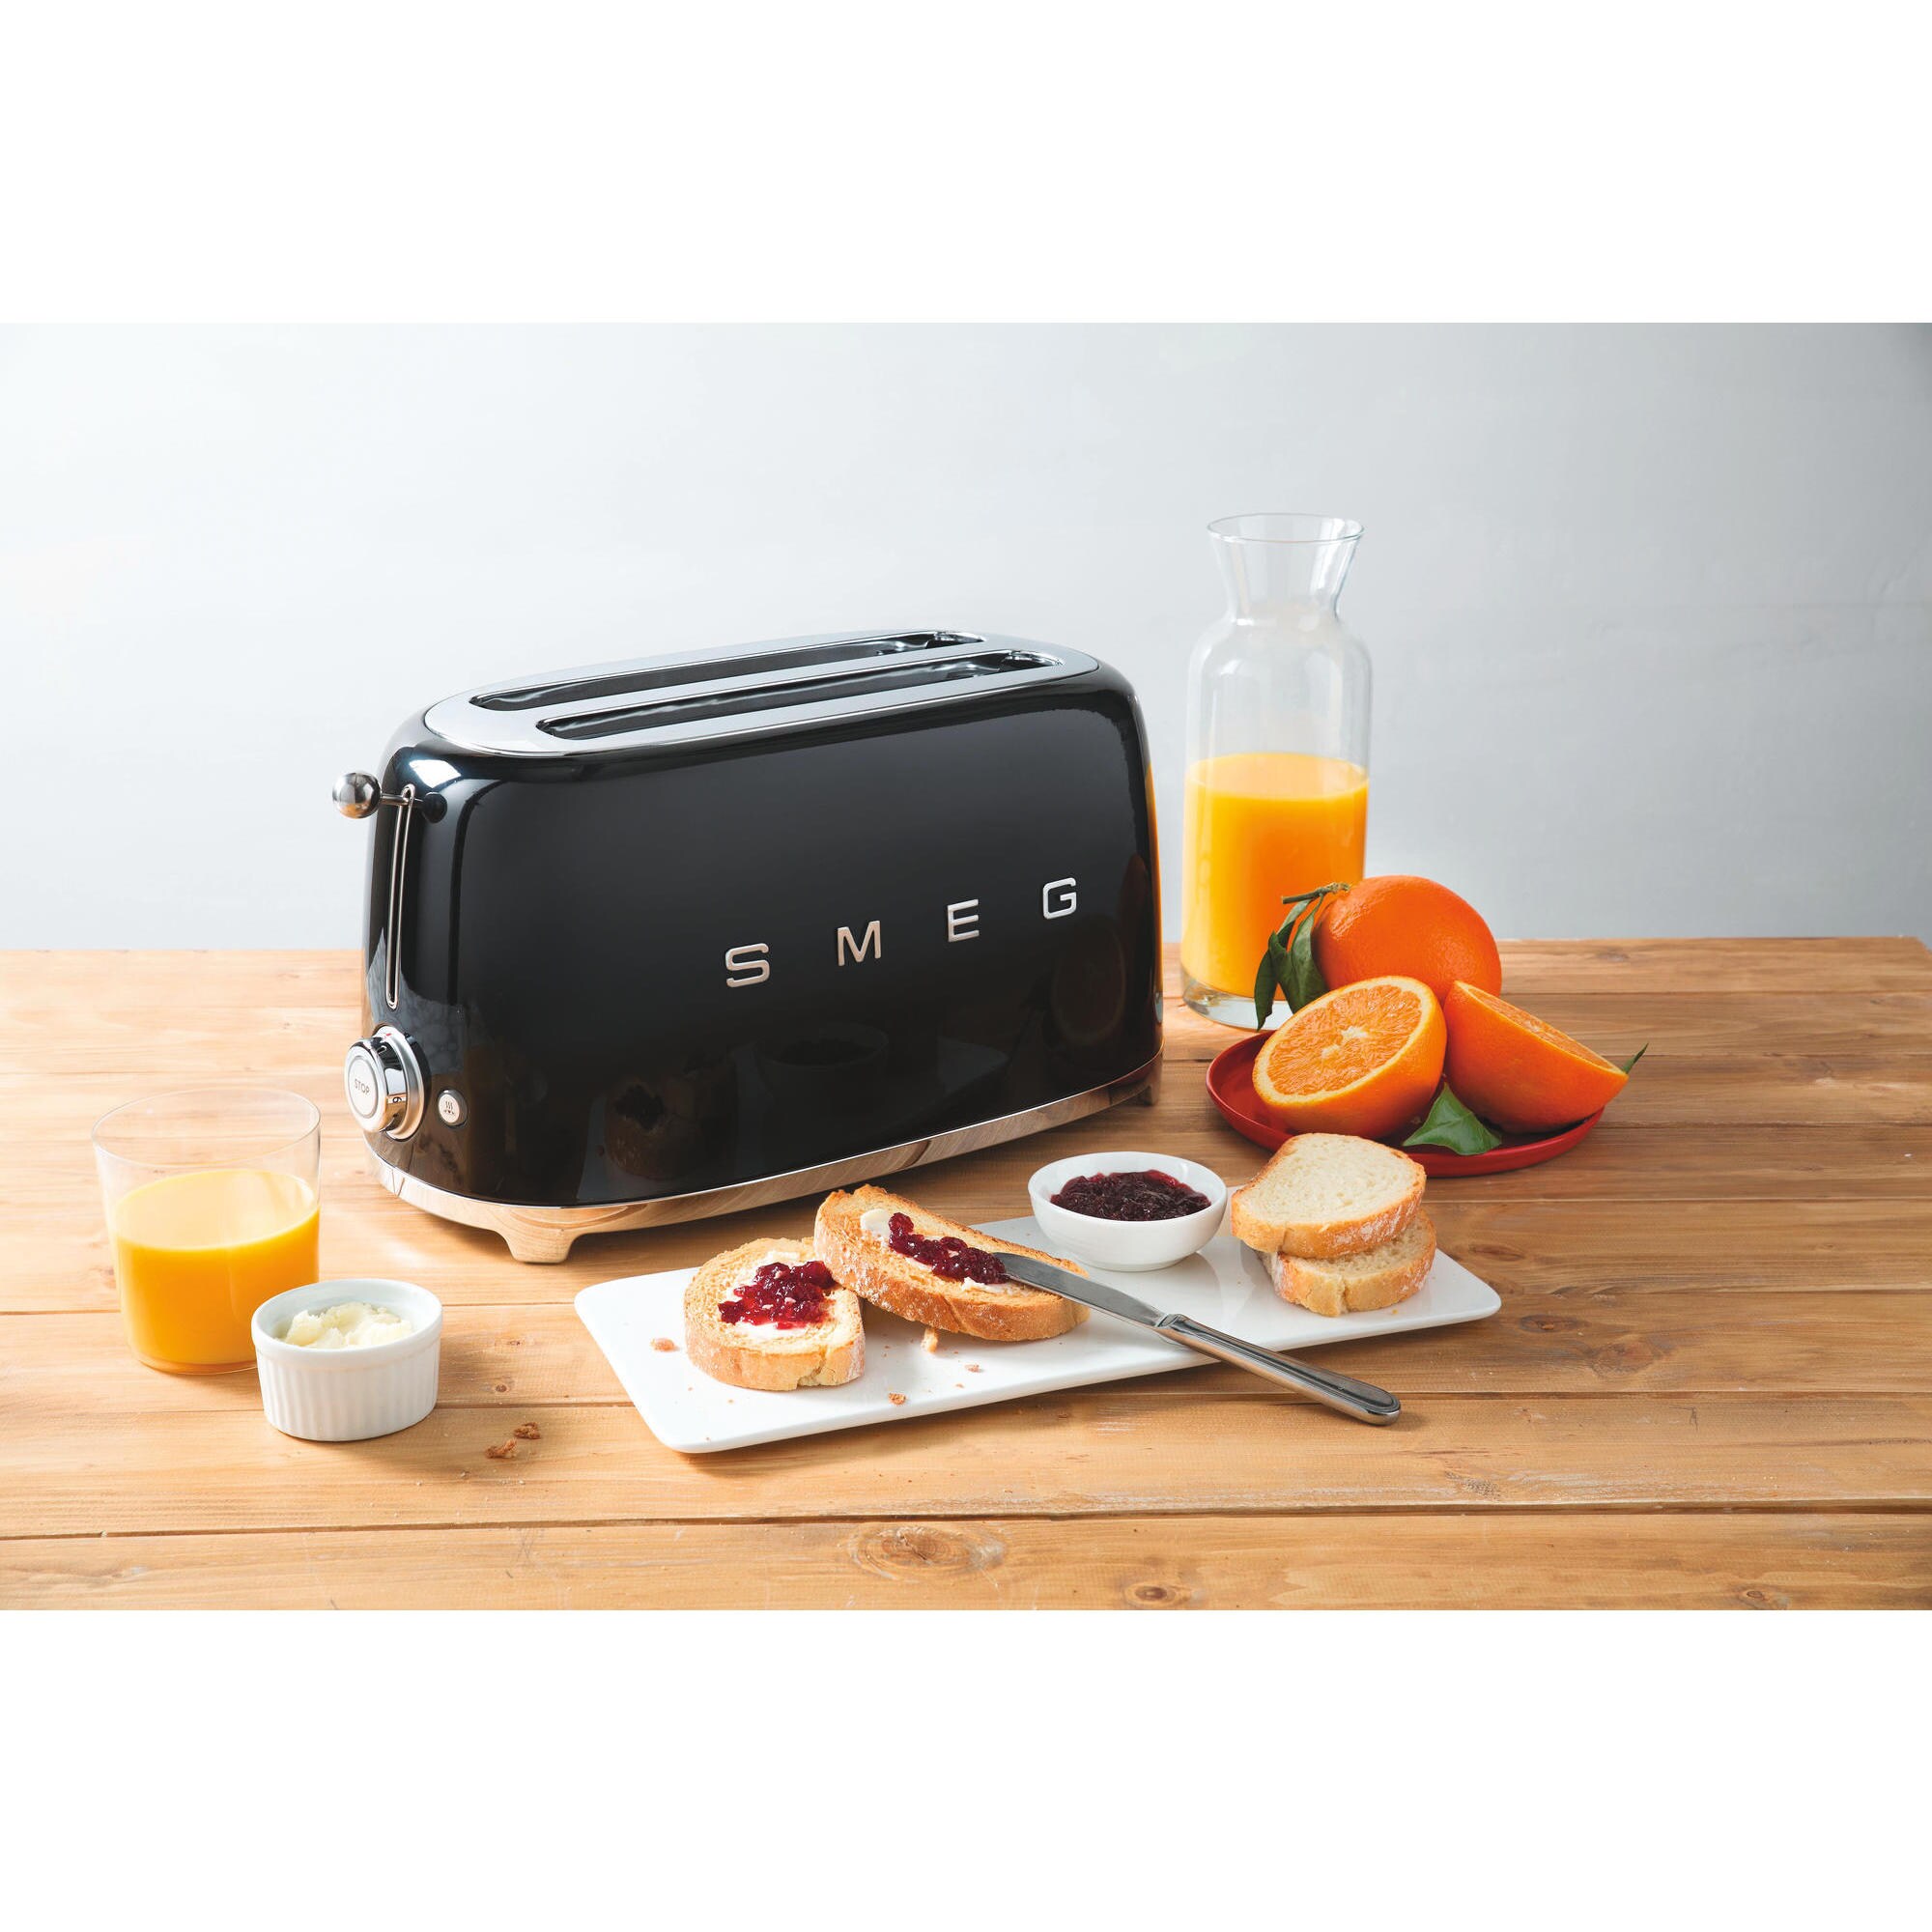  Smeg 4-Slice Toaster Black : Home & Kitchen